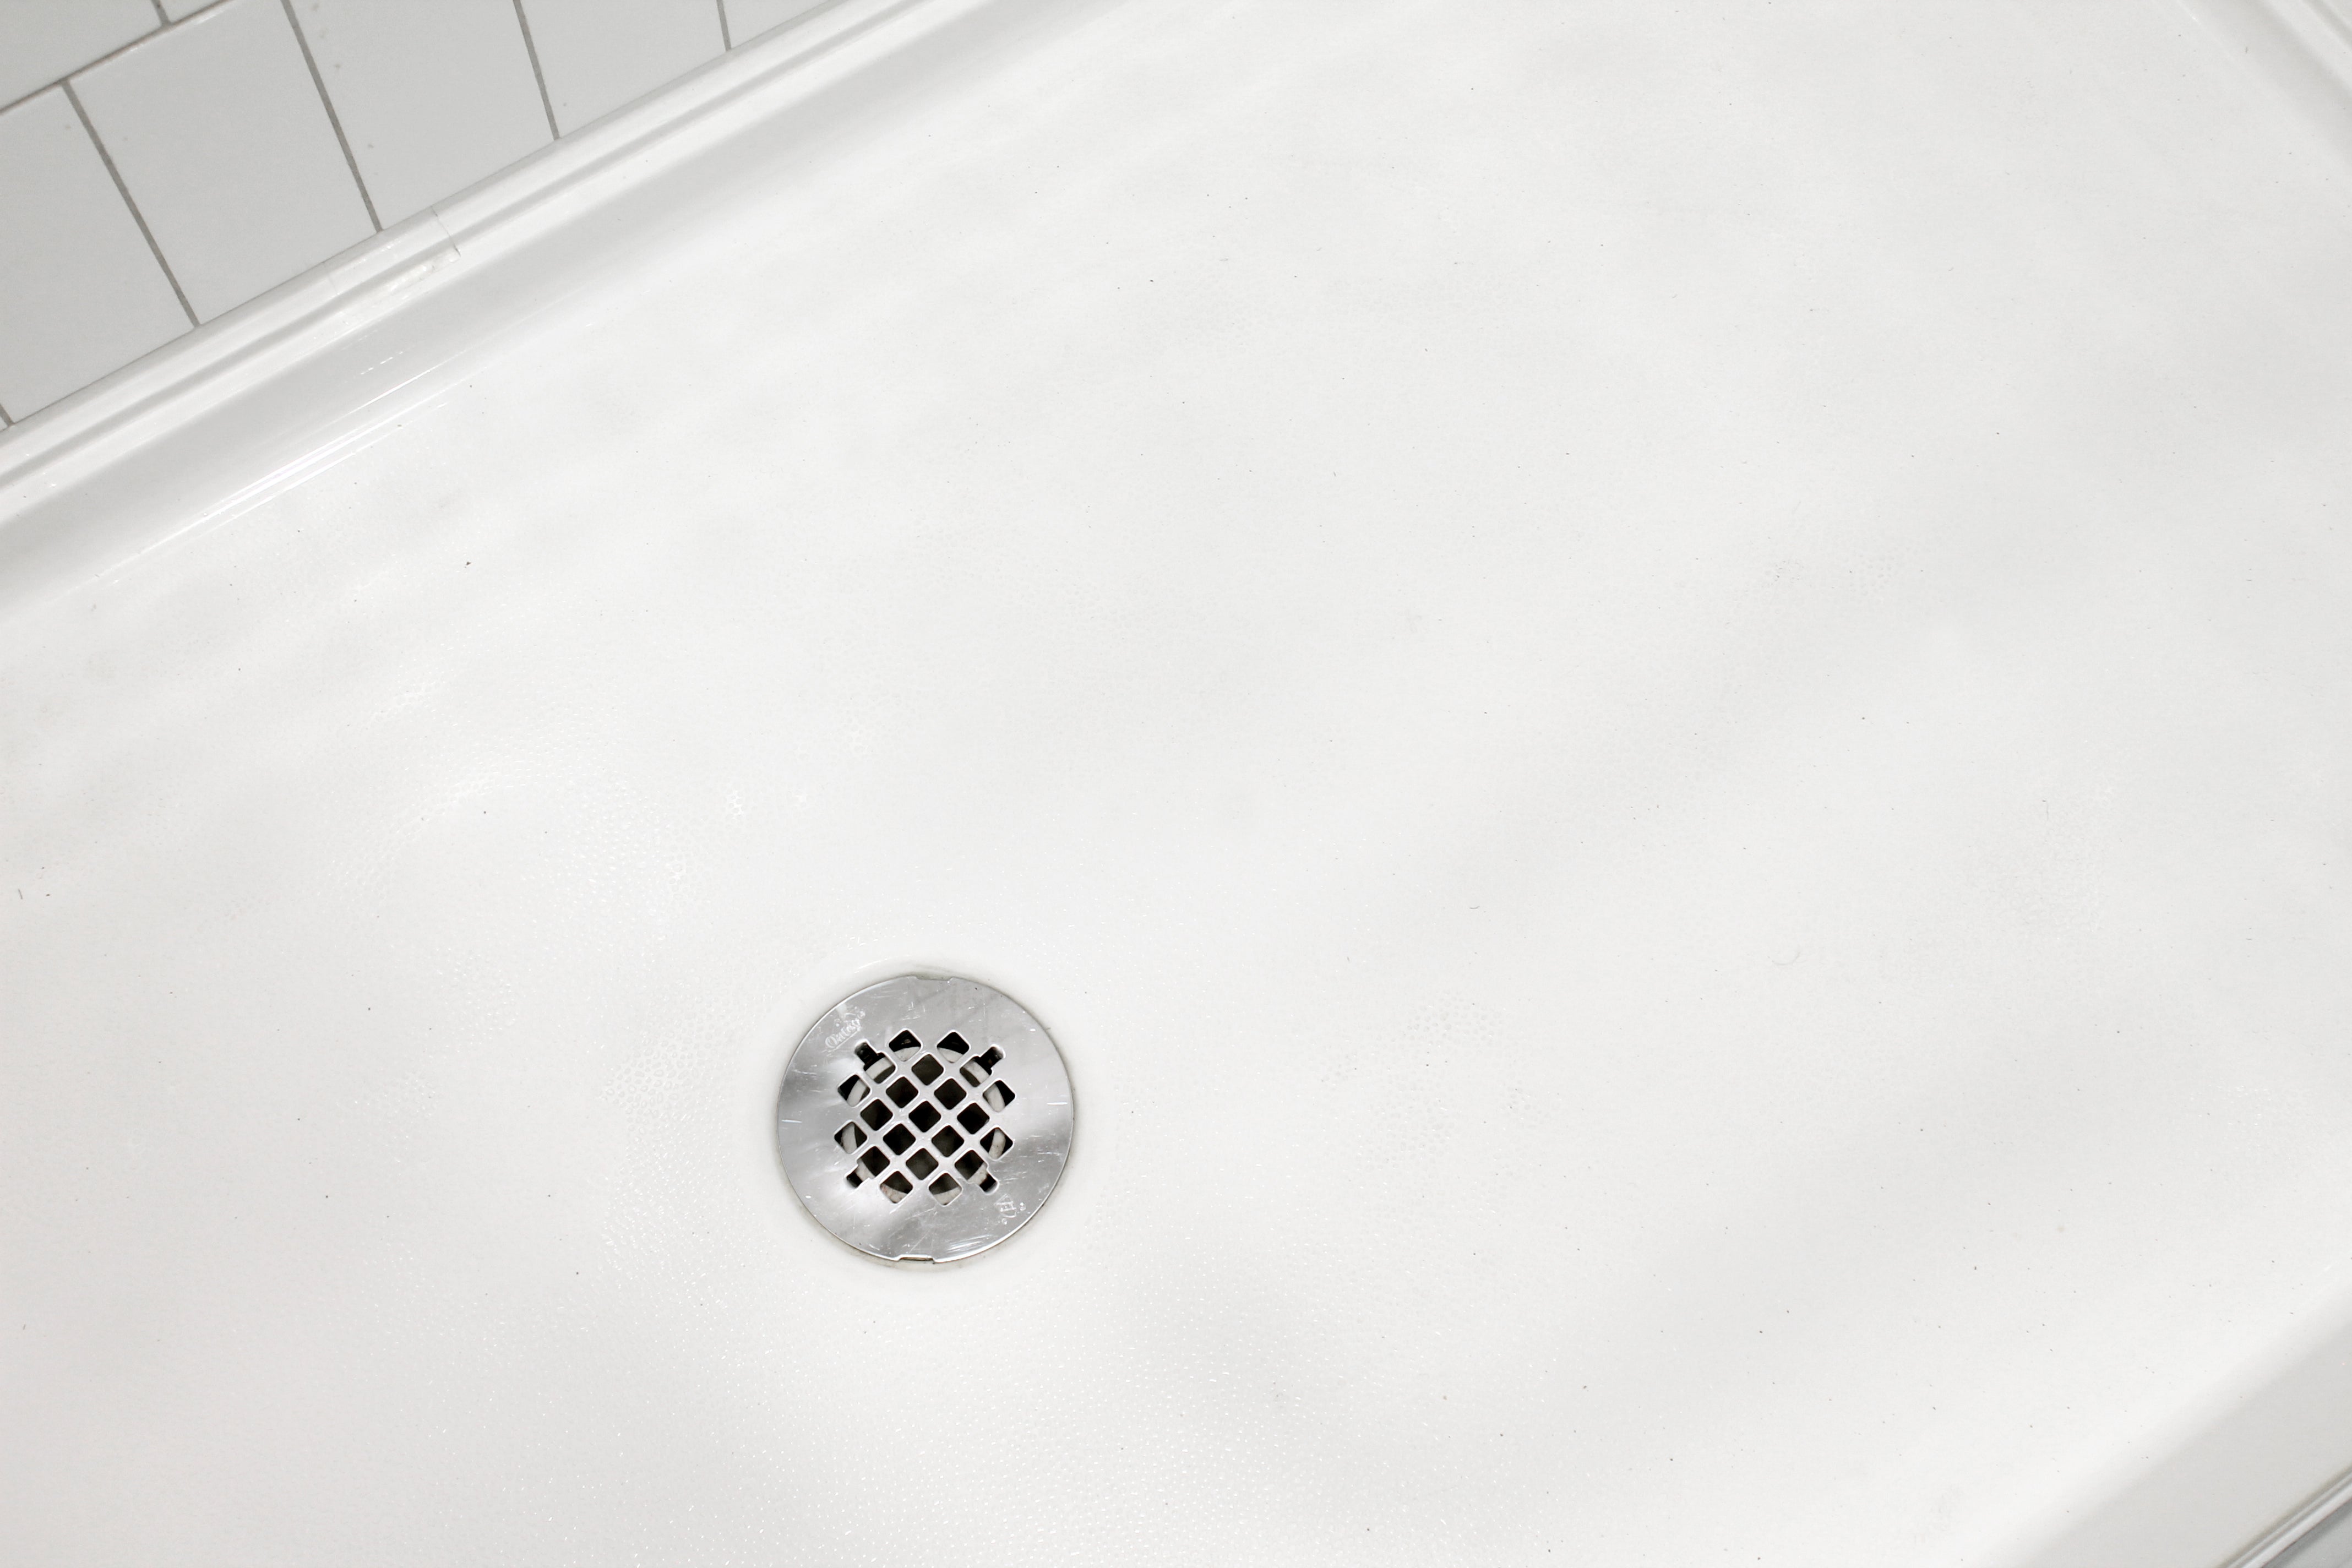 Installing A No Caulk Shower Drain Oatey, Plumbers Putty Or Silicone To Seal Bathtub Drain